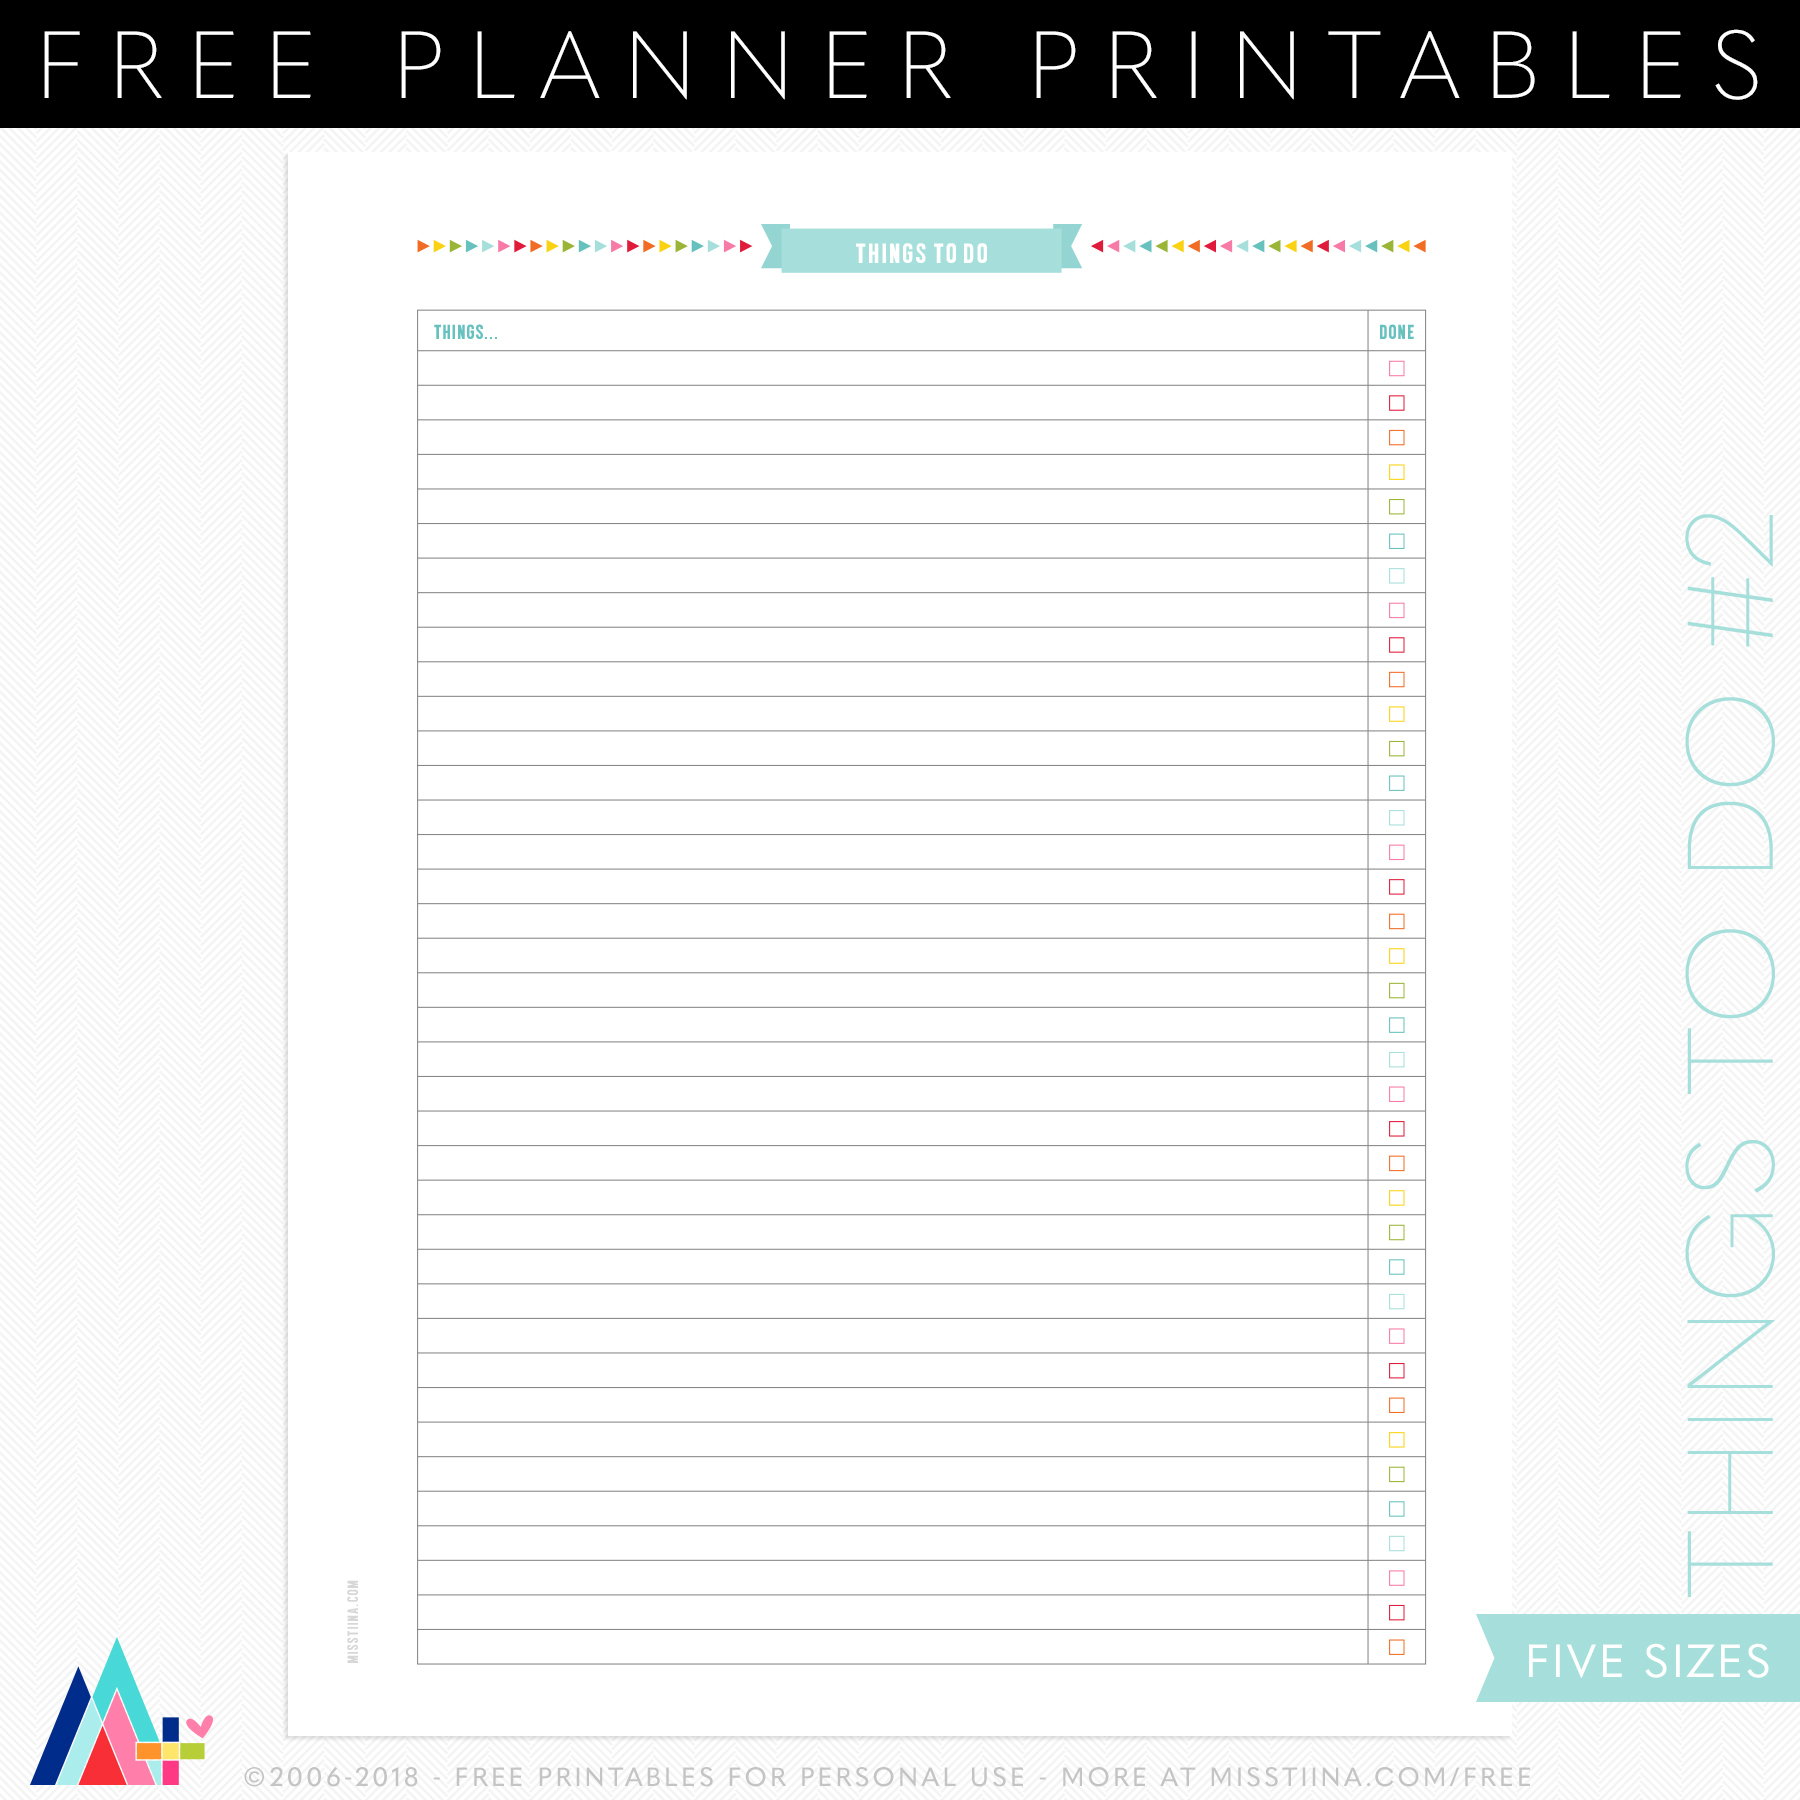 Planner Printables | Misstiina - Free Printable Planner 2017 2018